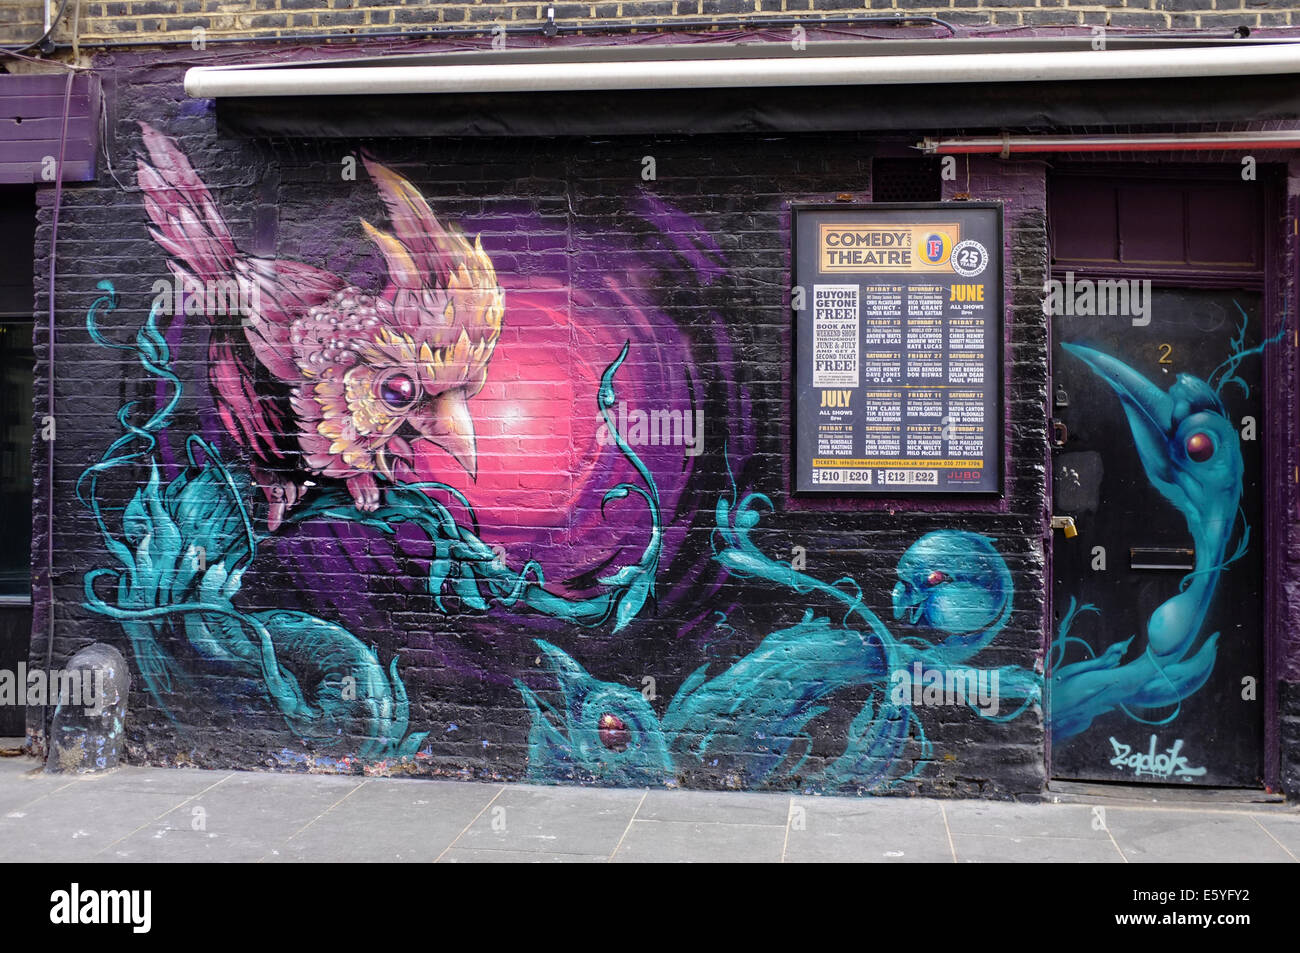 Comedy Cafe Theatre with Graffiti wall art in Shoreditch Stock Photo